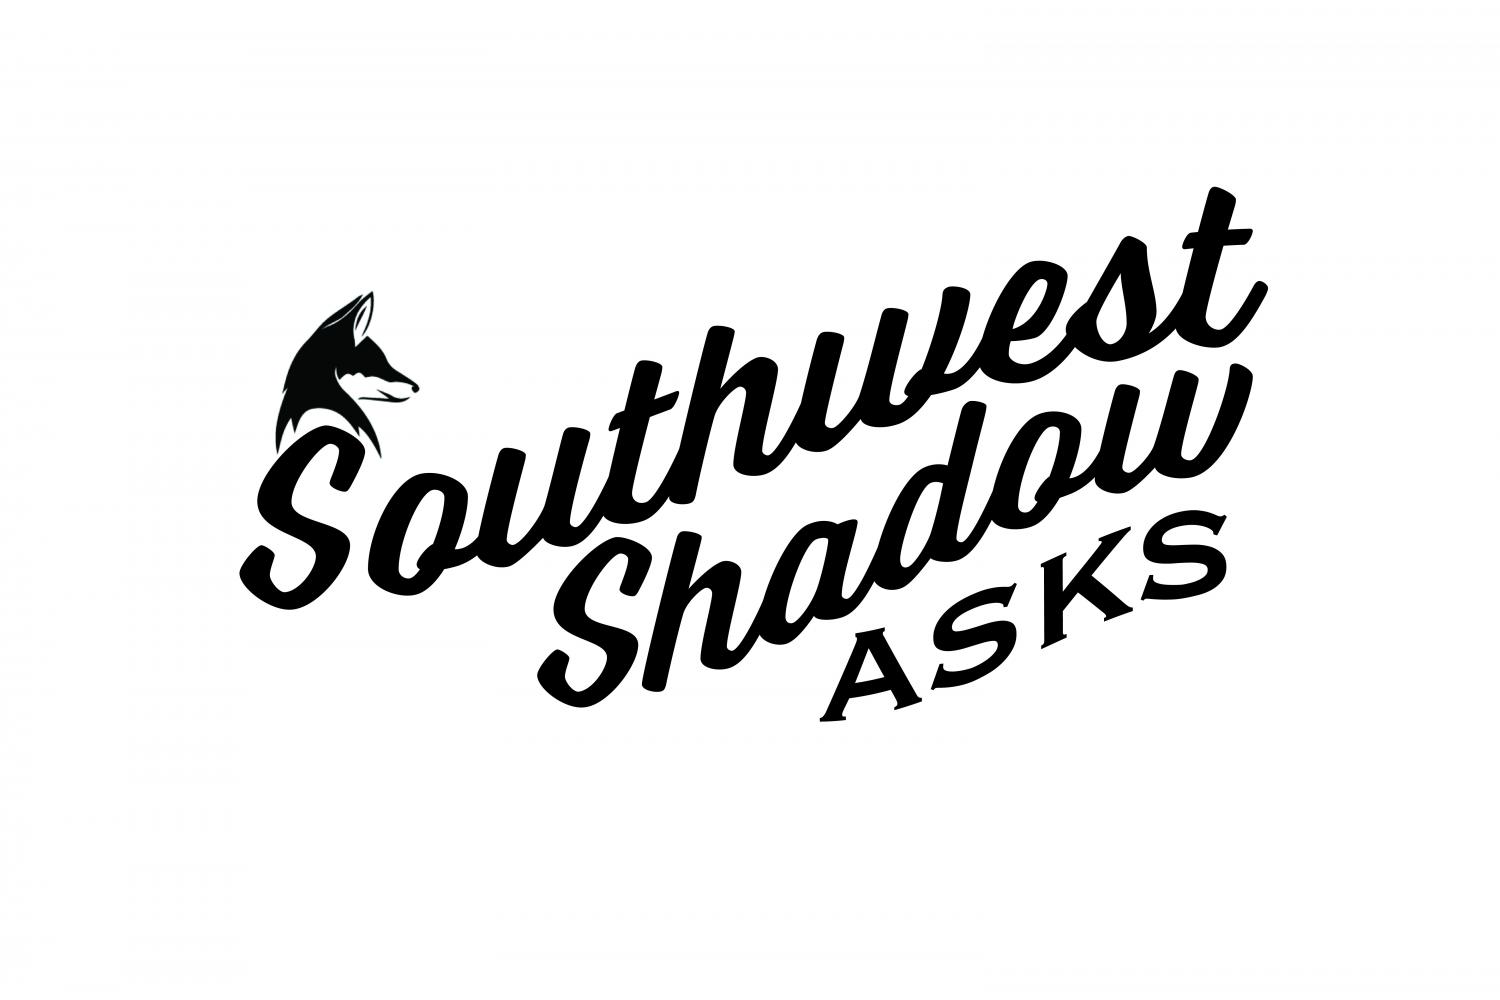 Southwest Shadow Asks: Toni Alfanso